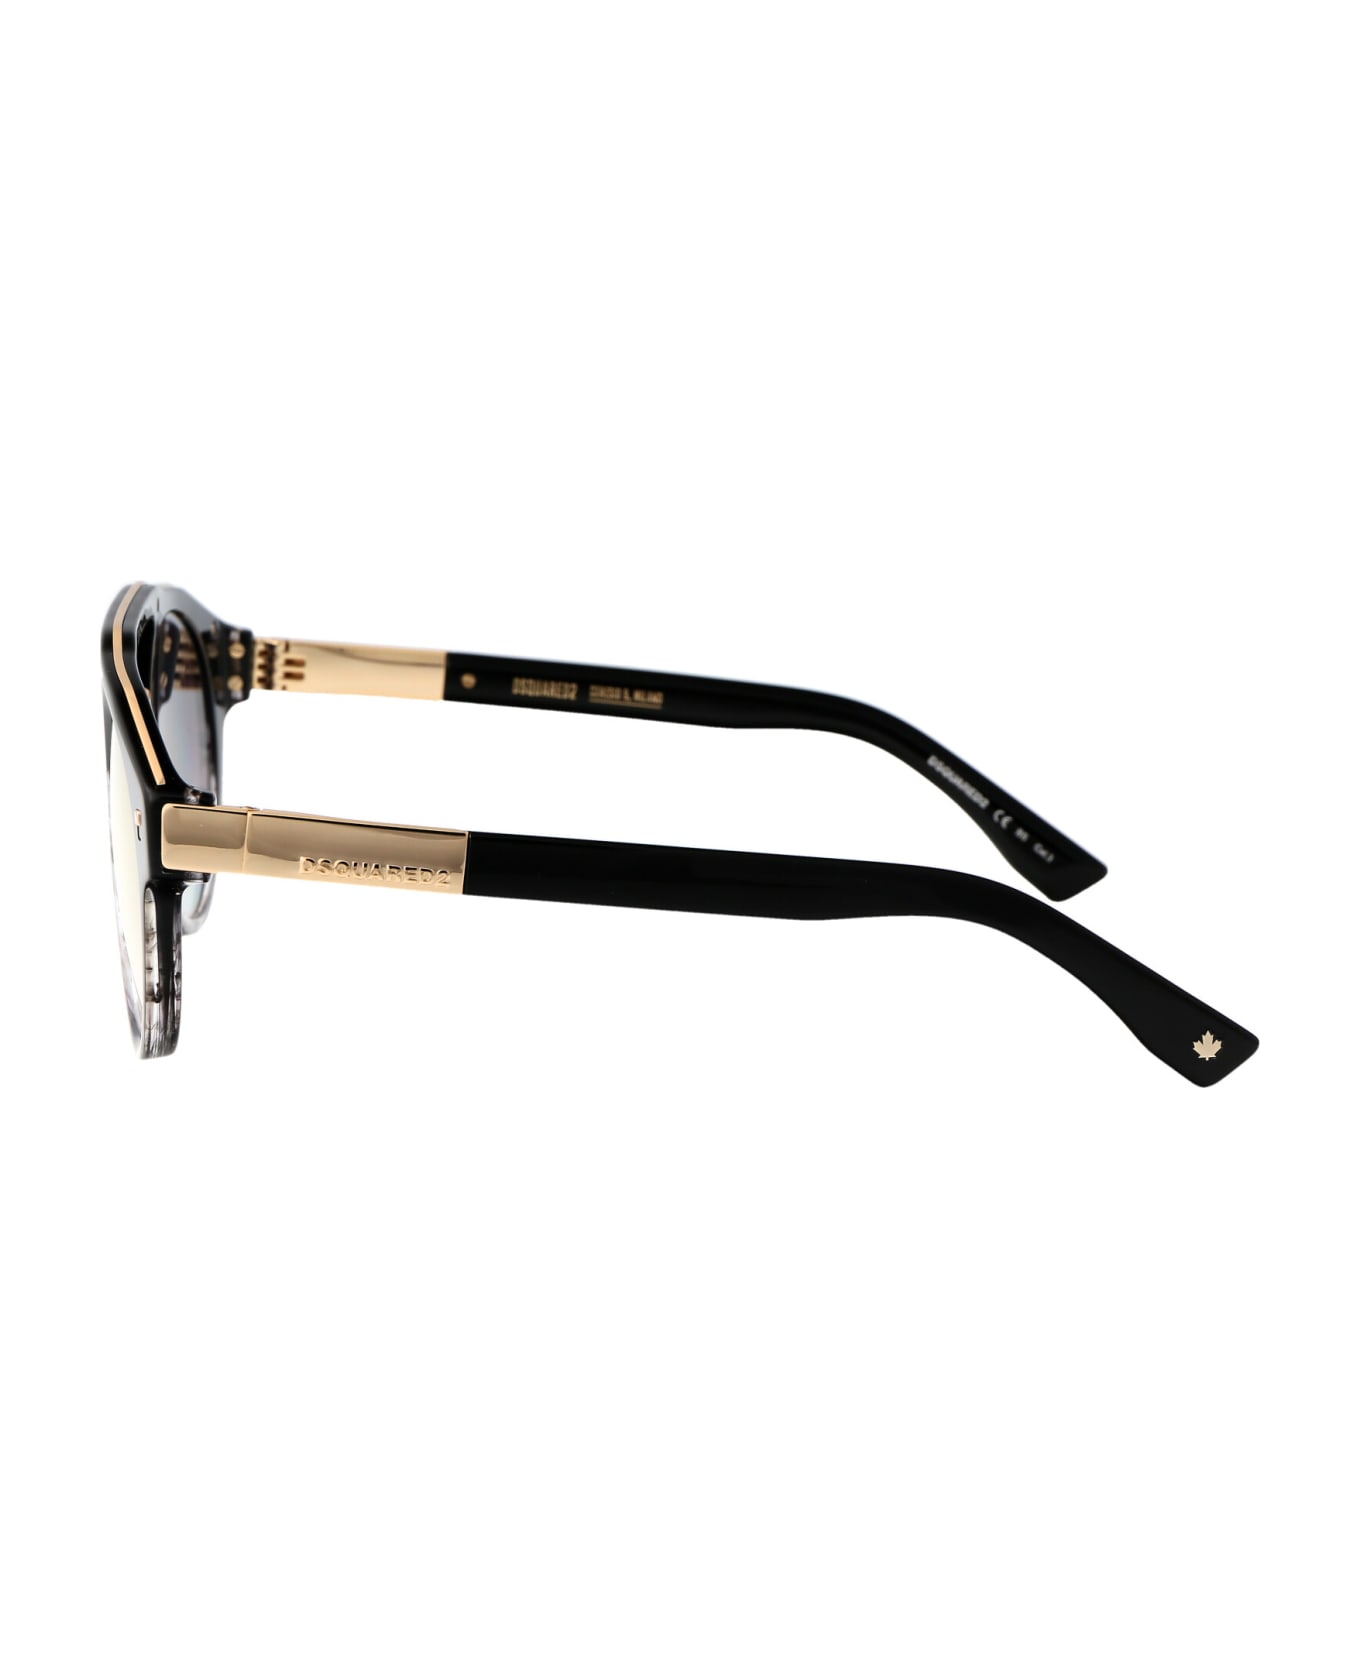 Dsquared2 Eyewear D2 0085/s Sunglasses - XOWFQ BLACK GREY HORN サングラス